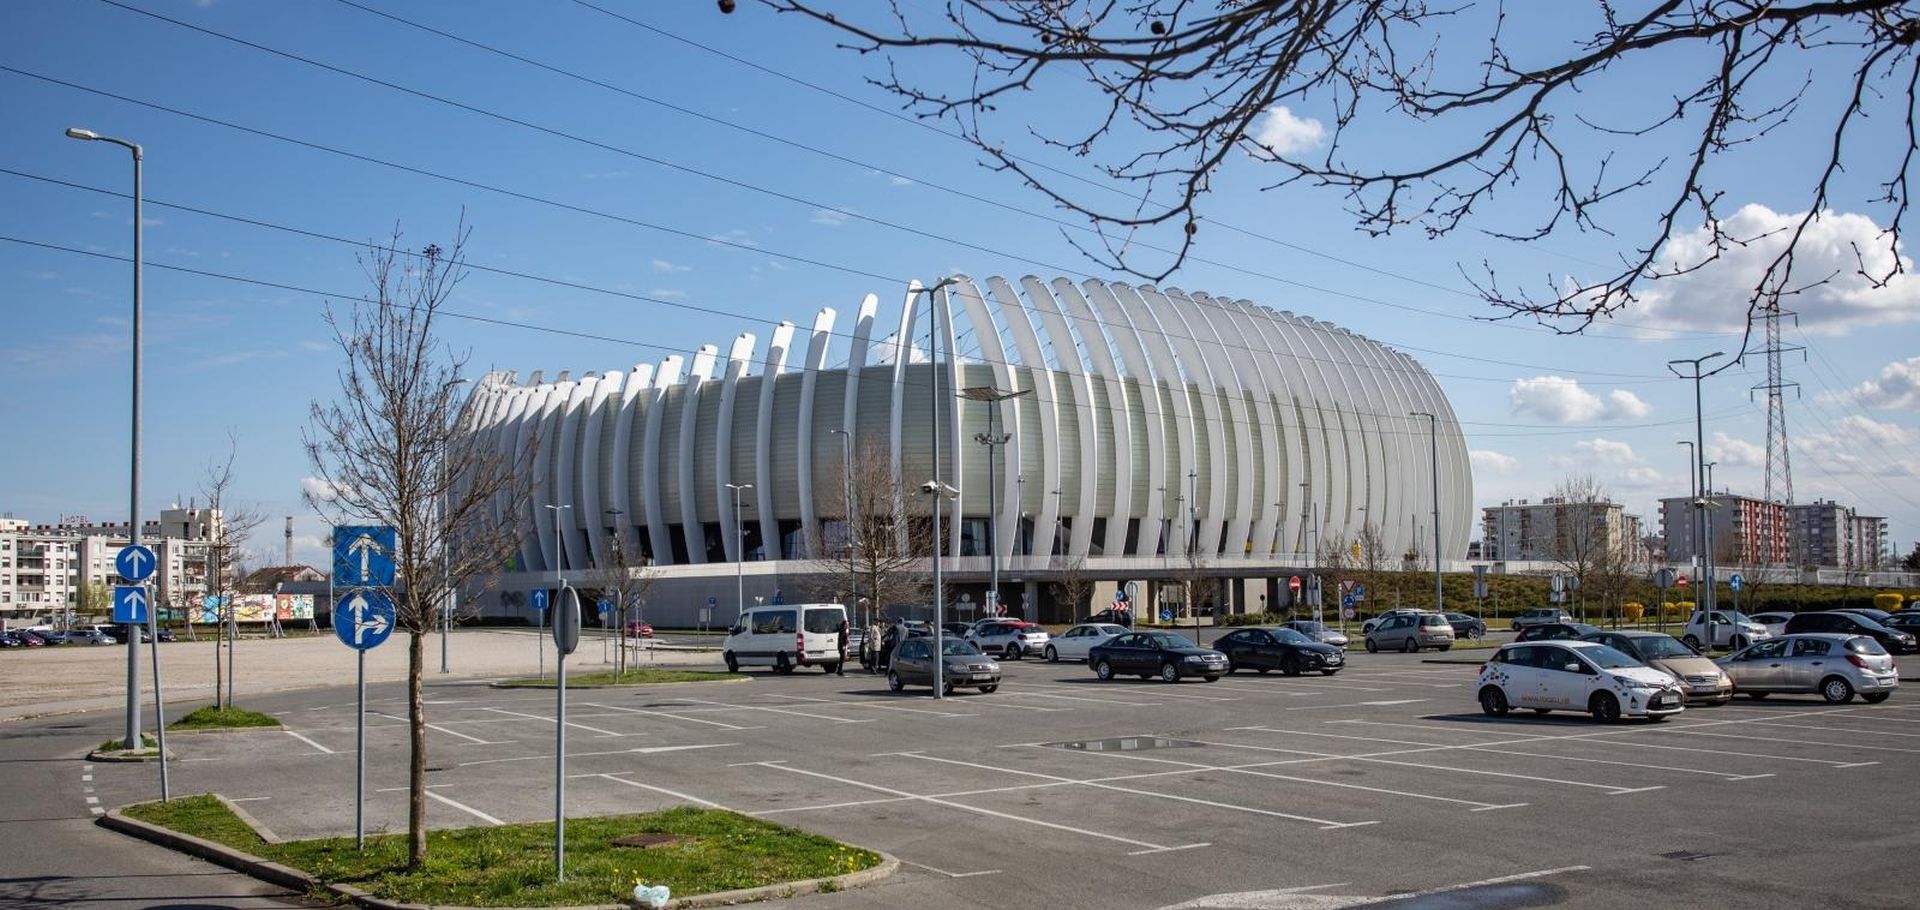 14.03.2020., Zagreb - Djelomicno prazno parkiraliste Arena centra ukazuje na smanjen priljev kupaca u popodnevnim satima.
Photo: Davor Puklavec/PIXSELL